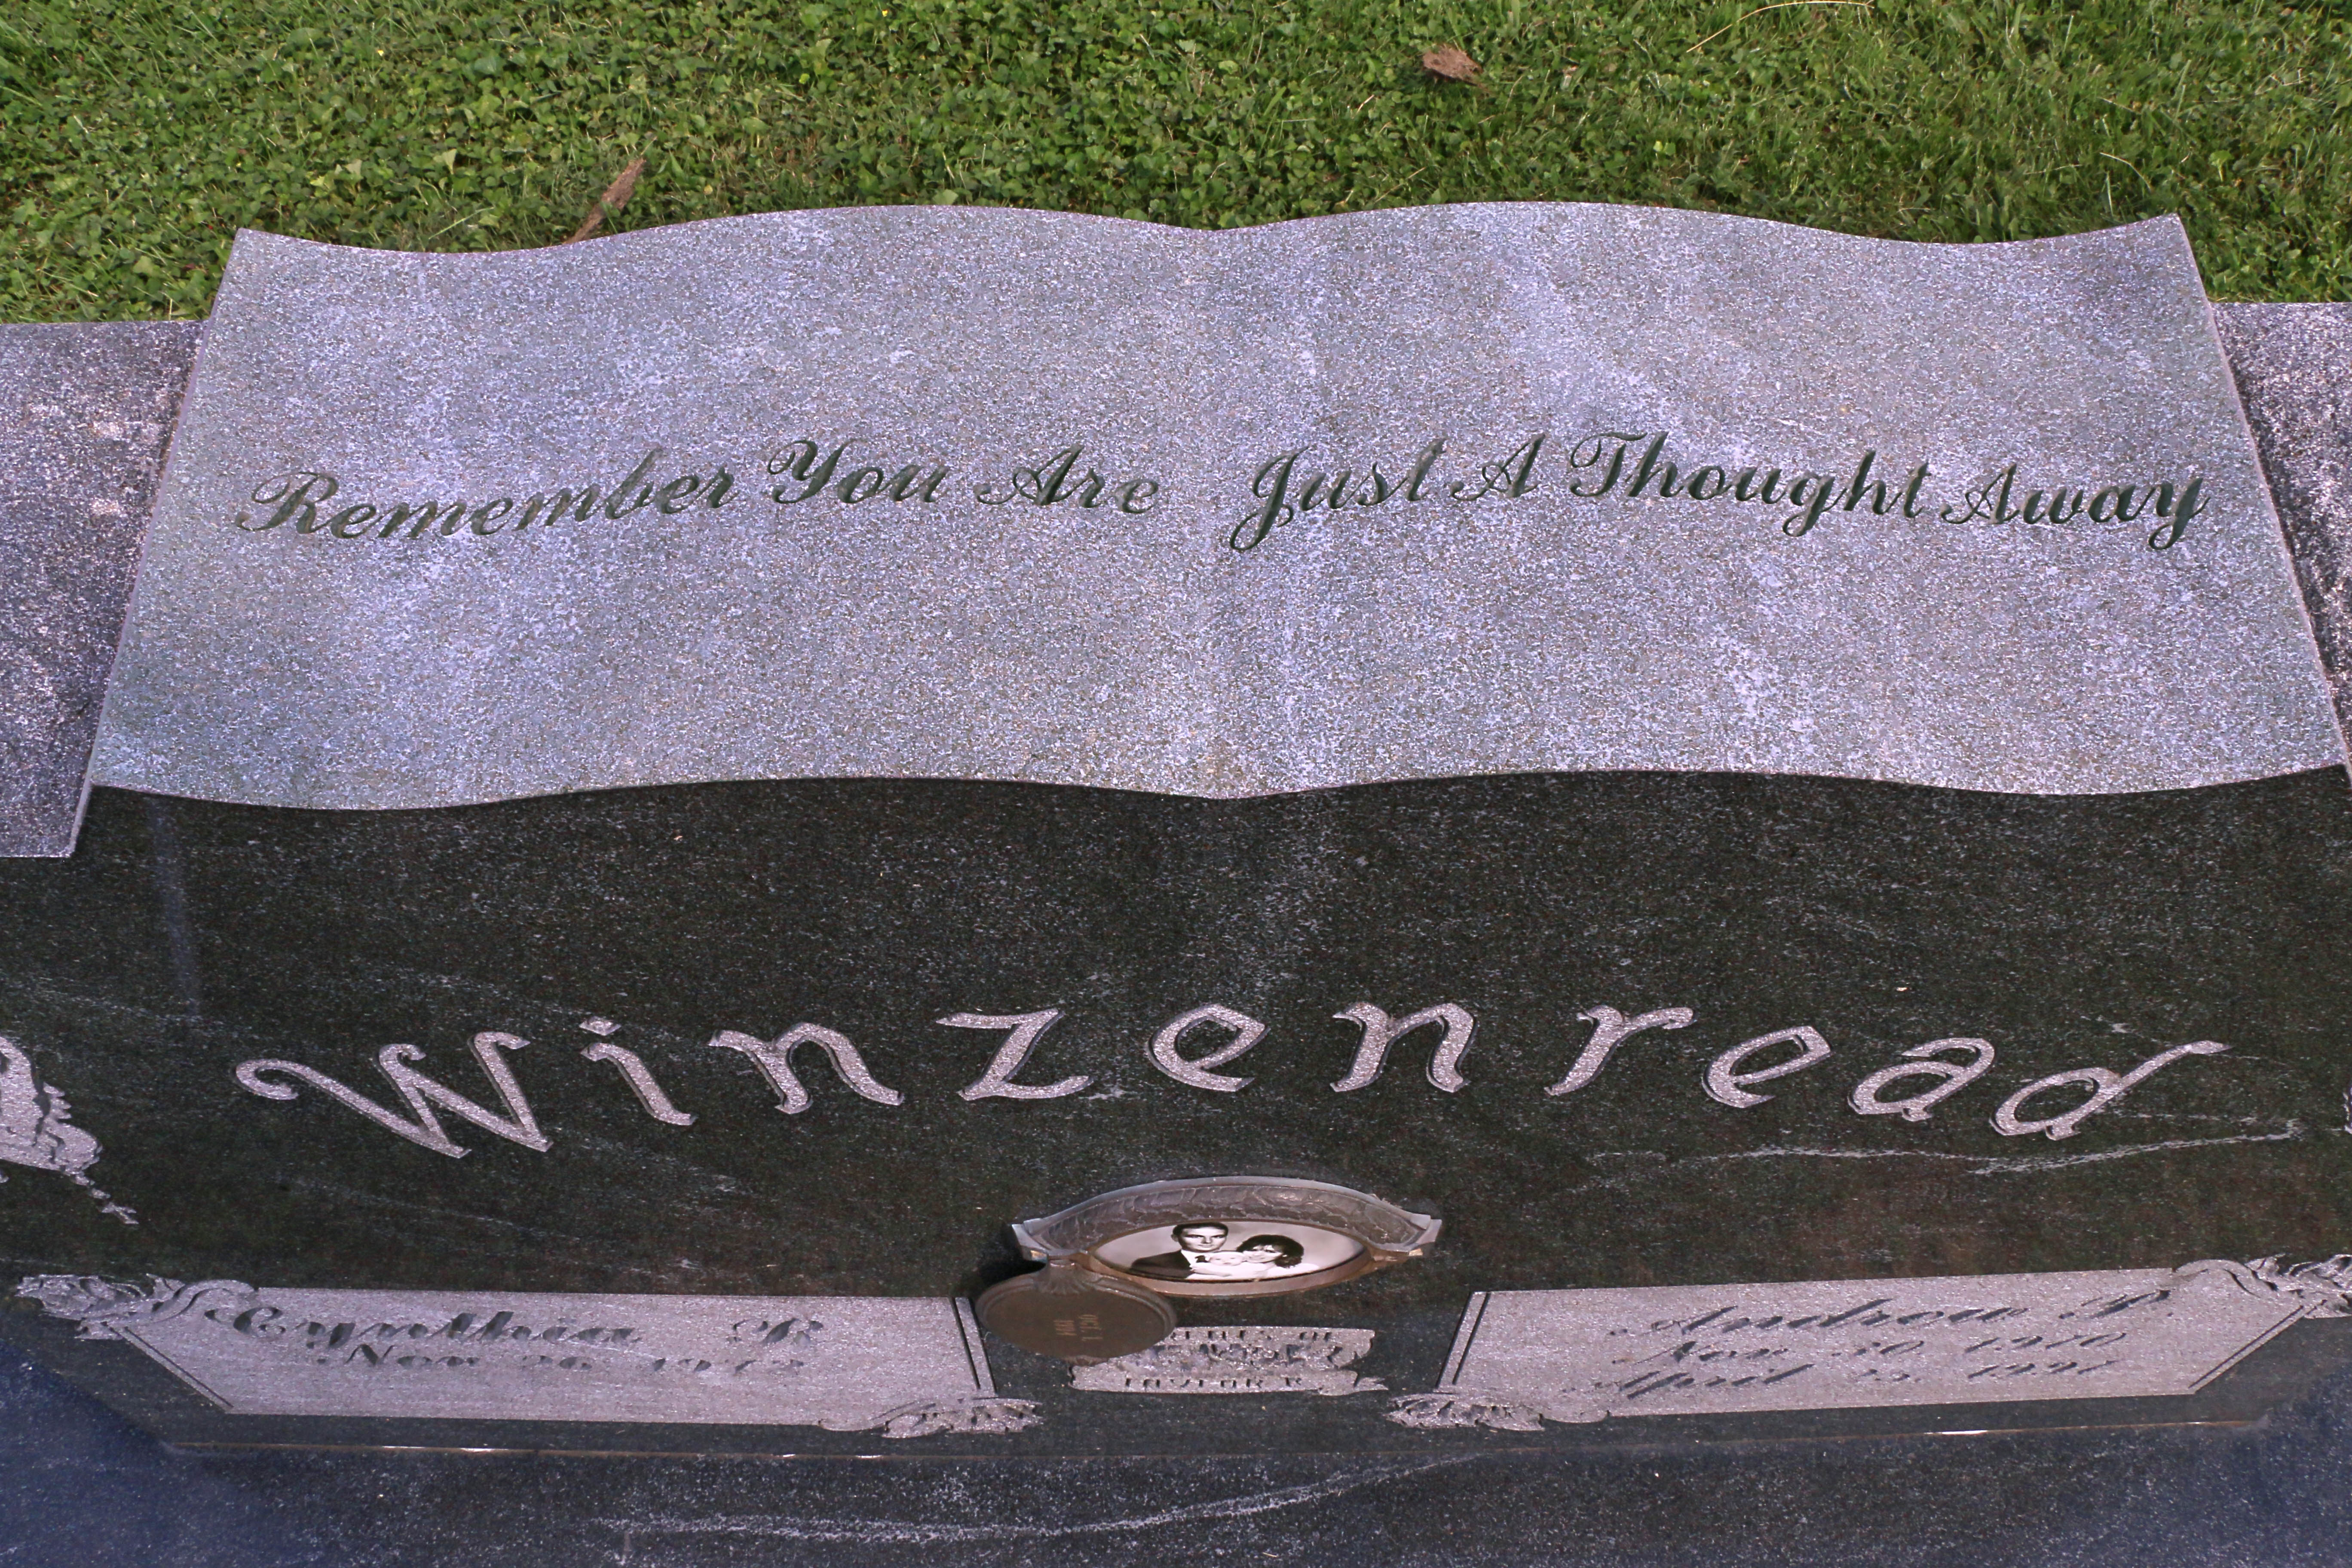 Headstone close-up - top inscription